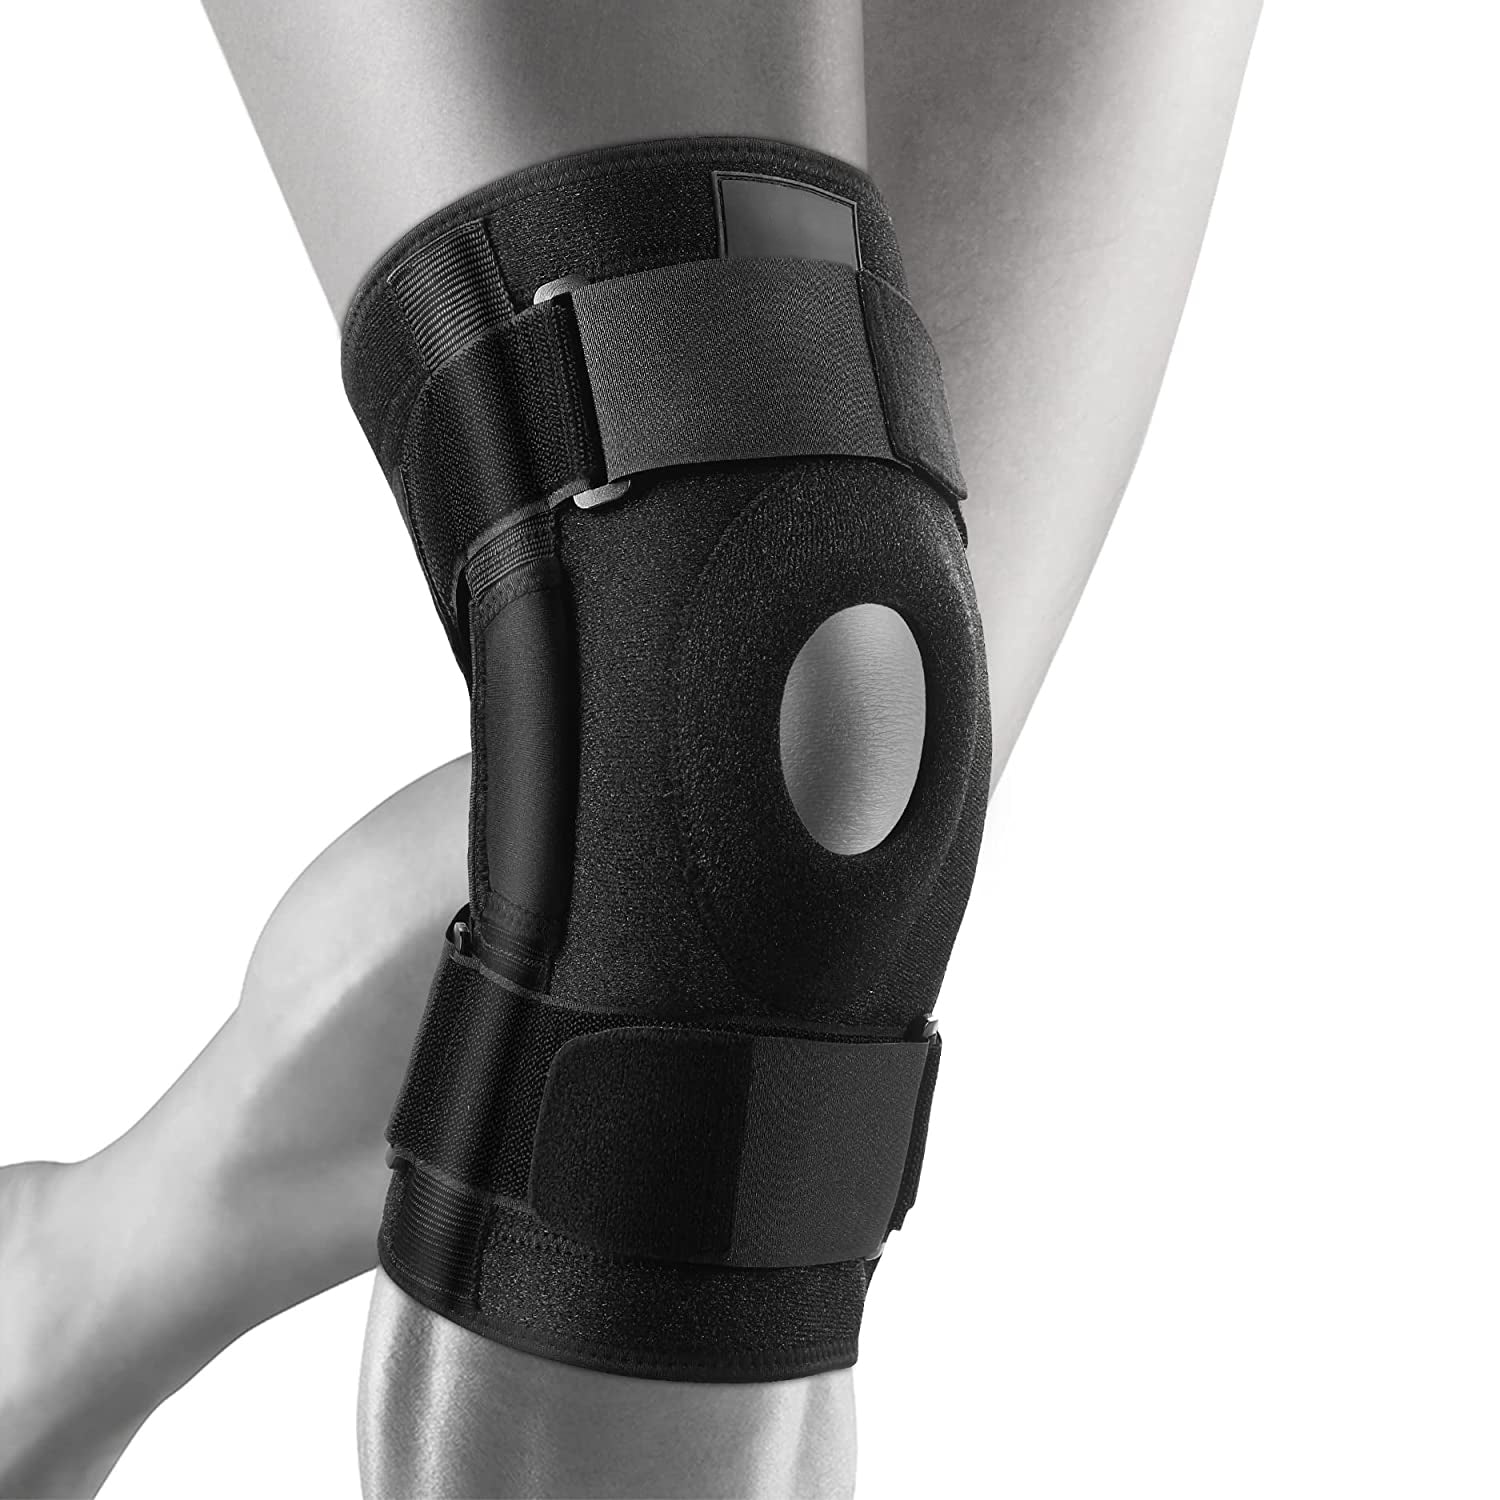 Tonus Elast Neoprene knee band support with open patella ring